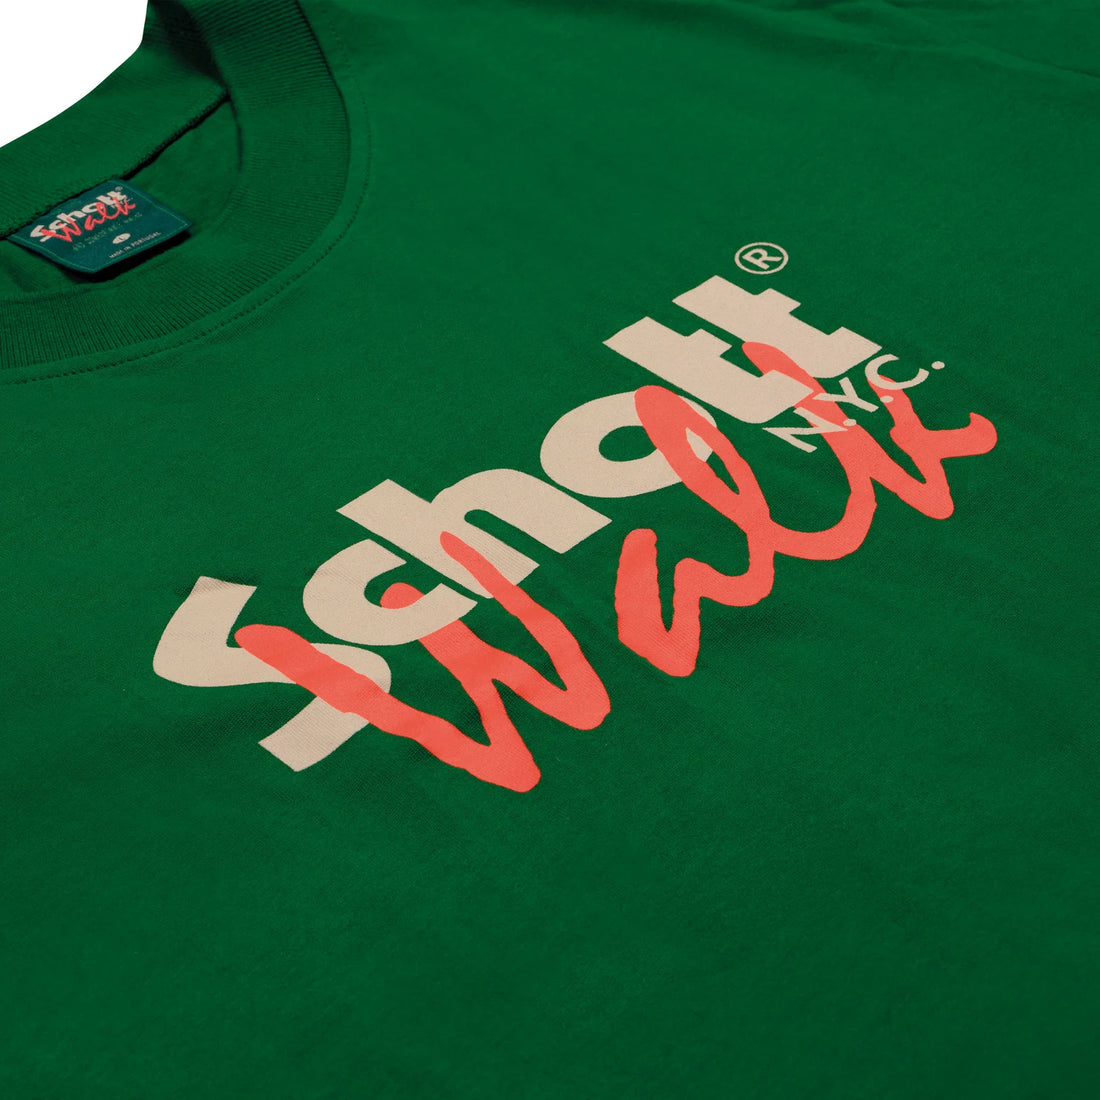 Walk in Paris x Schott NYC - The green "Paris New York" t-shirt